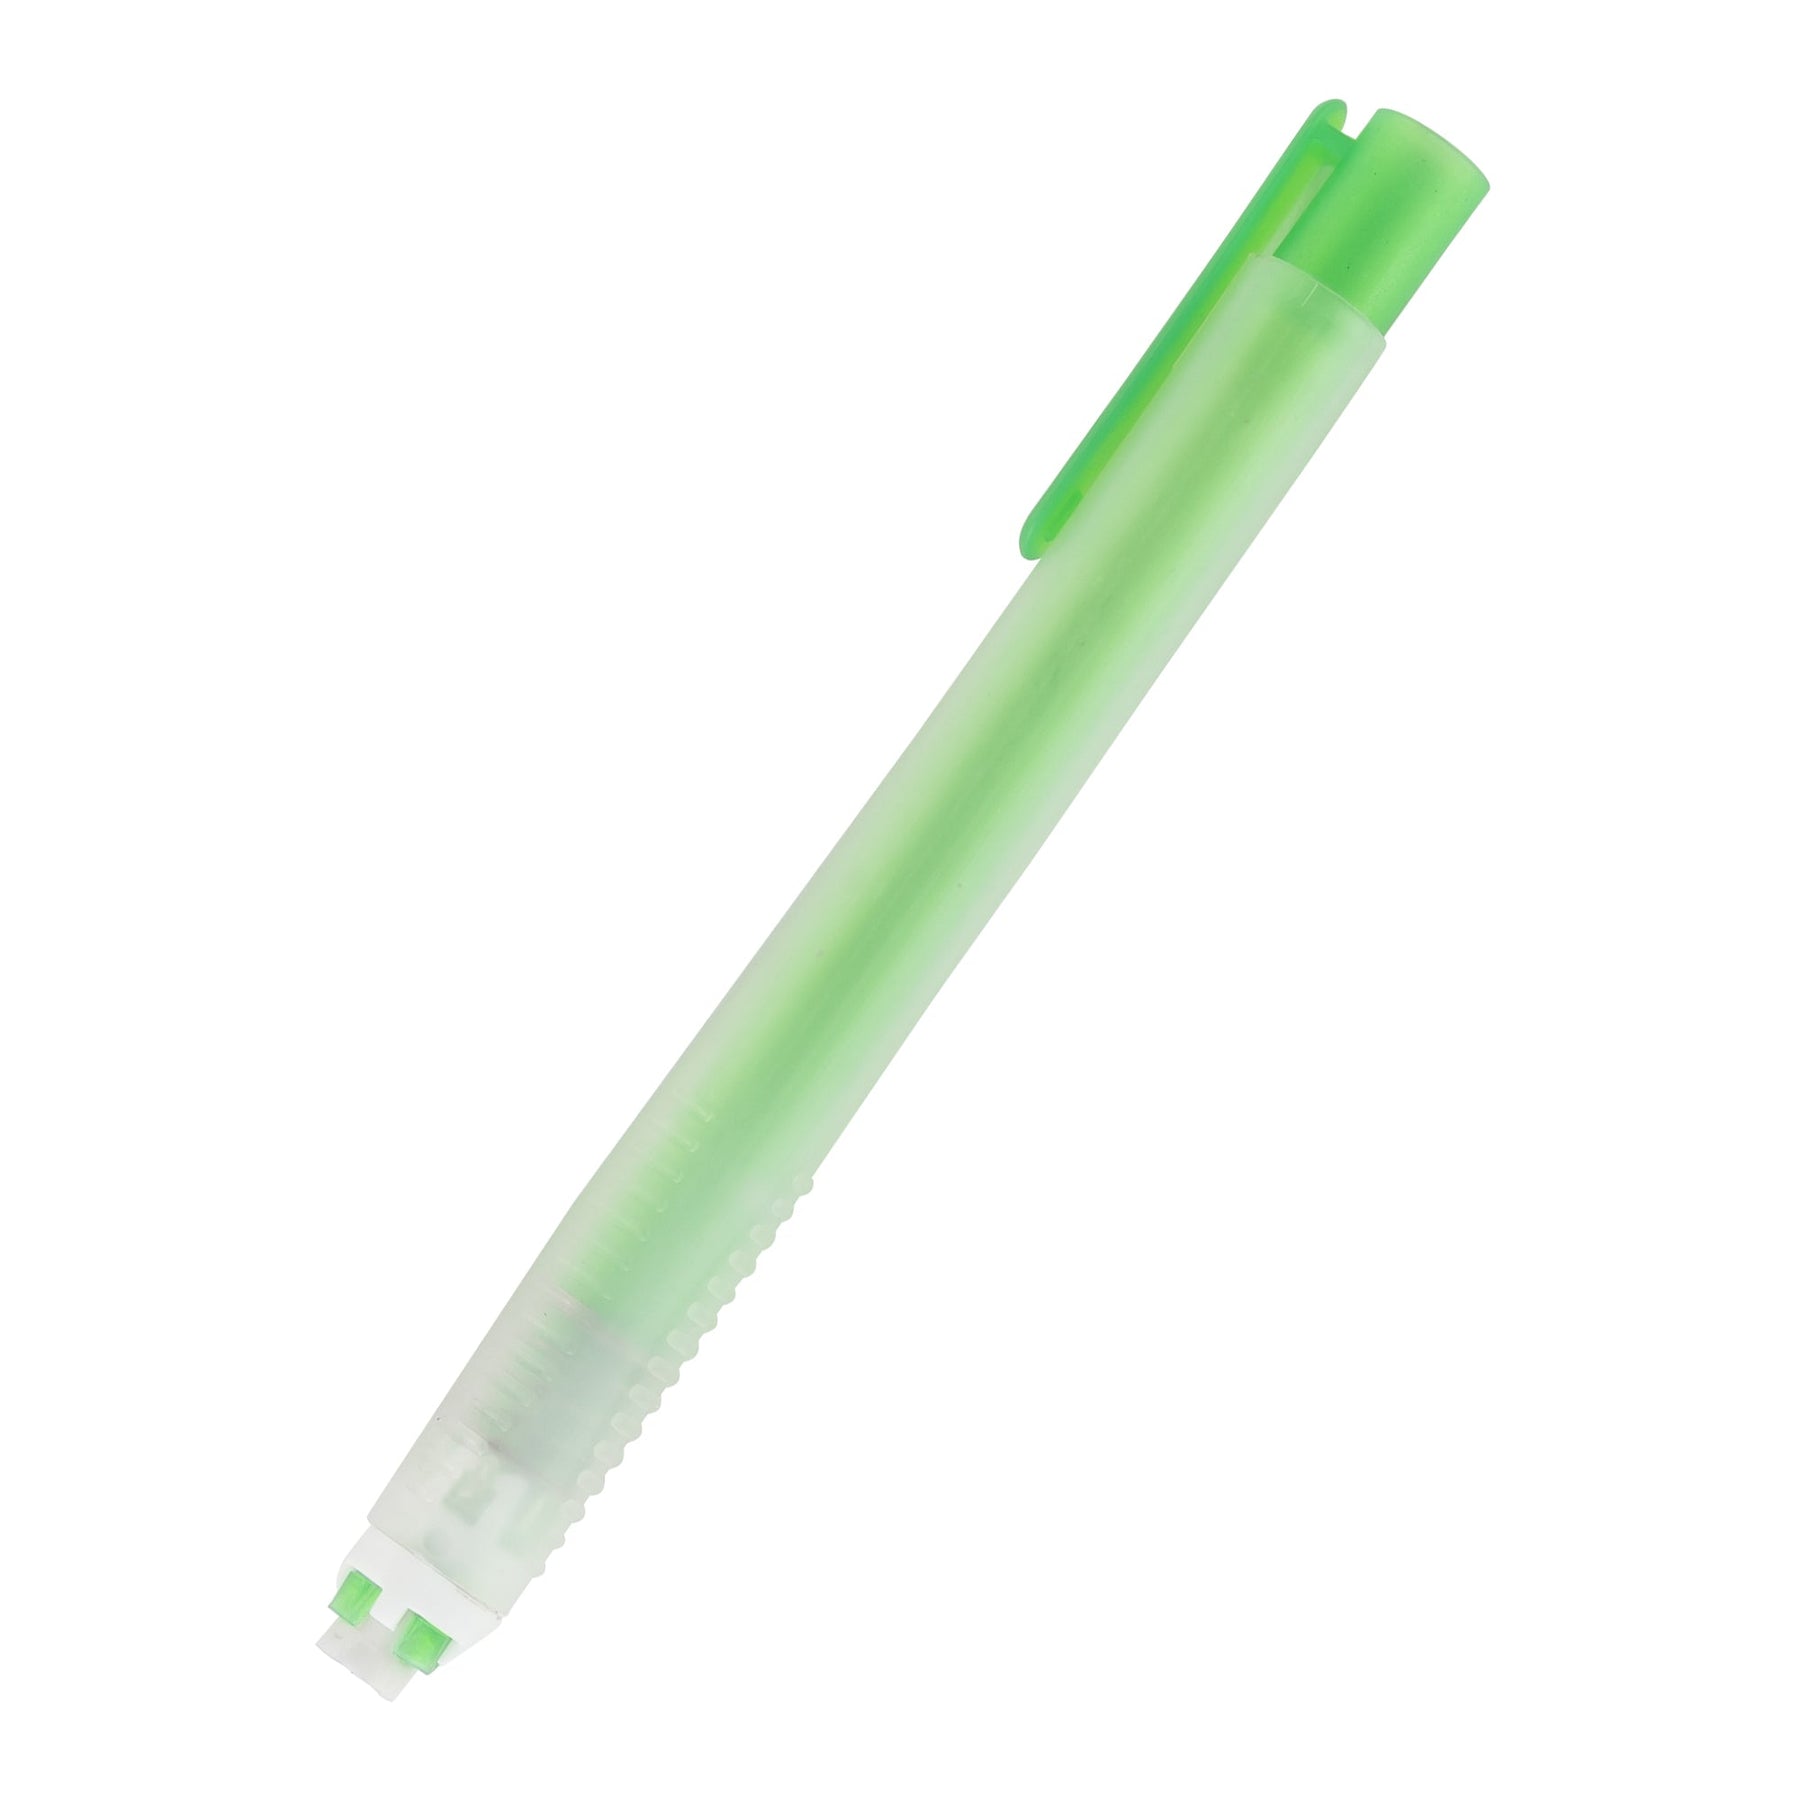 Pacific Arc, Eraser: Clip Stick, white plastic - w/transparent black holder